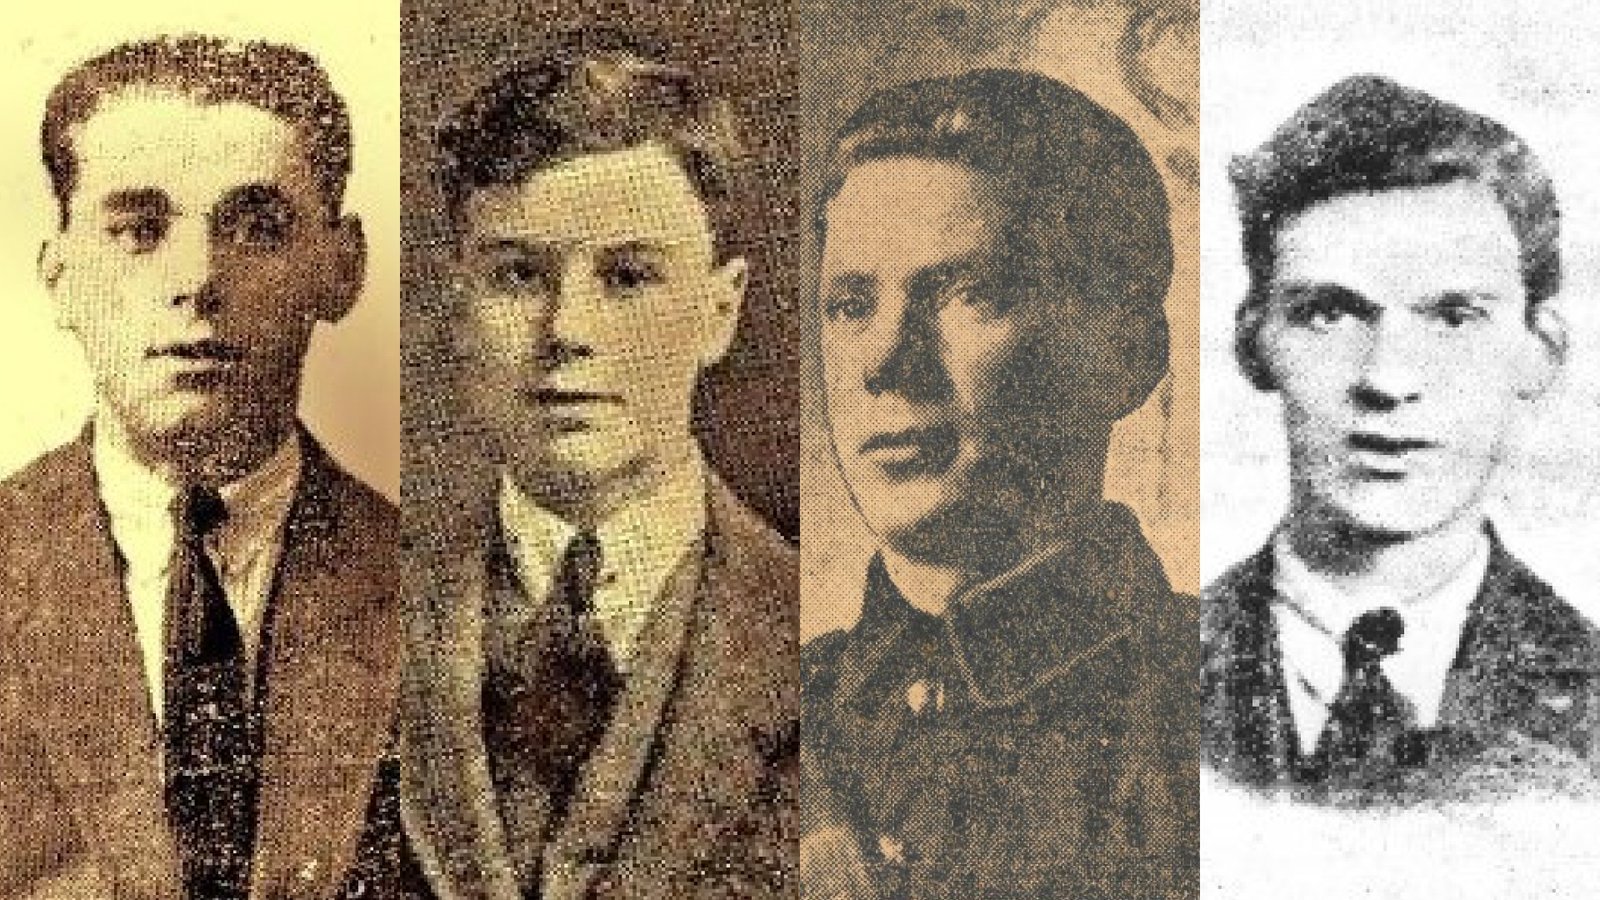 Image - Left to Right: Peter Cassidy, James Fisher, John Gaffney, Richard Twohig. Credit: Kilmainham Gaol Archive.